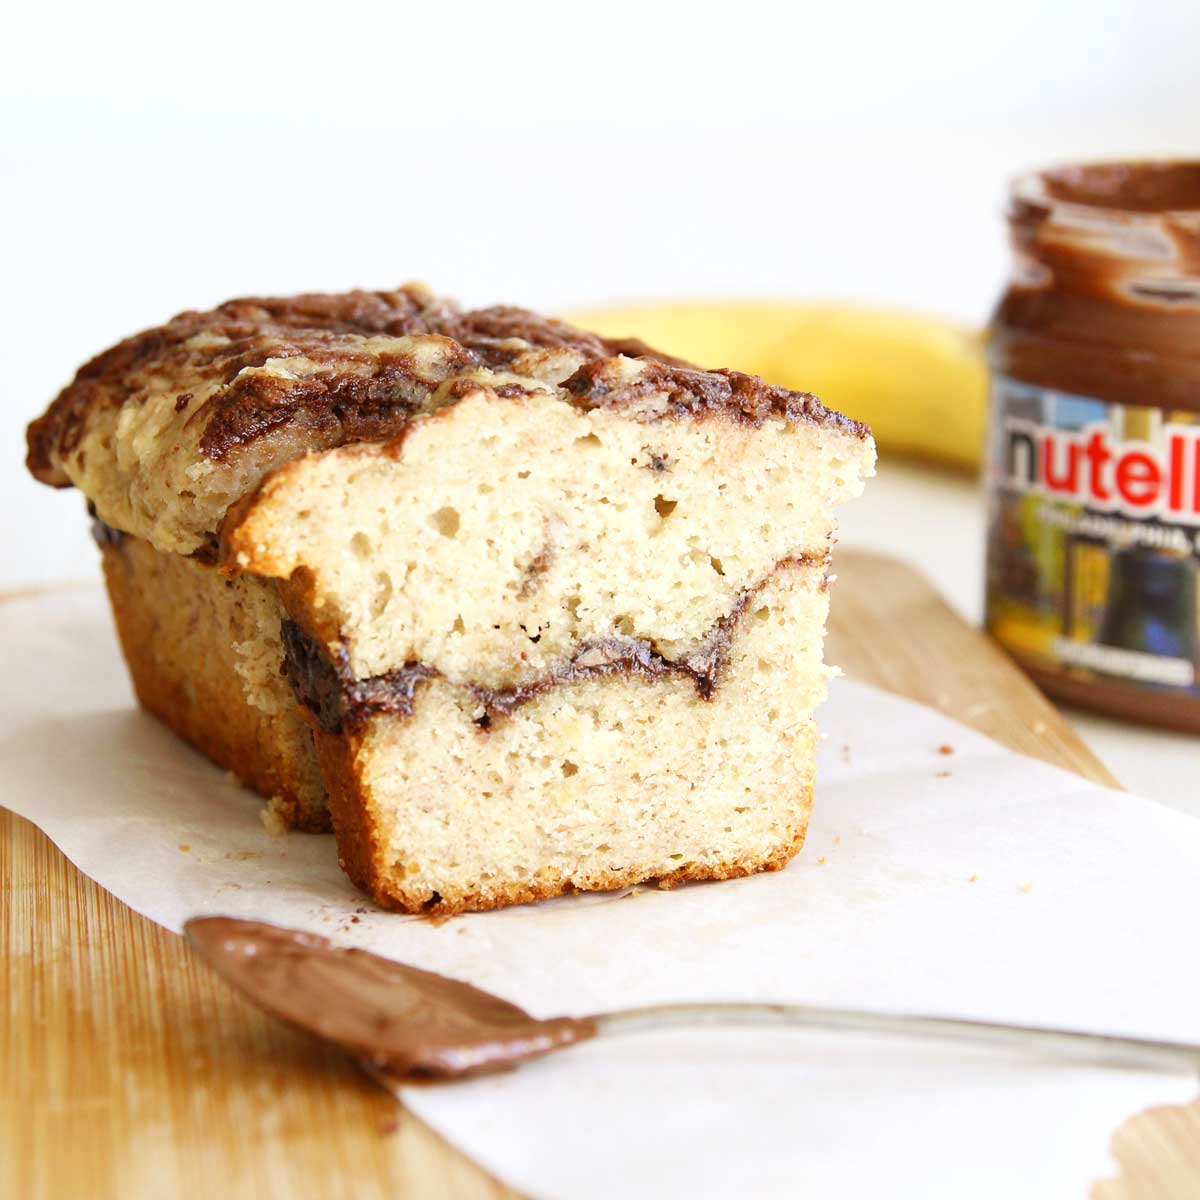 Super Moist Nutella Stuffed Banana Bread with Olive Oil & Almond Flour - Nutella Stuffed Banana